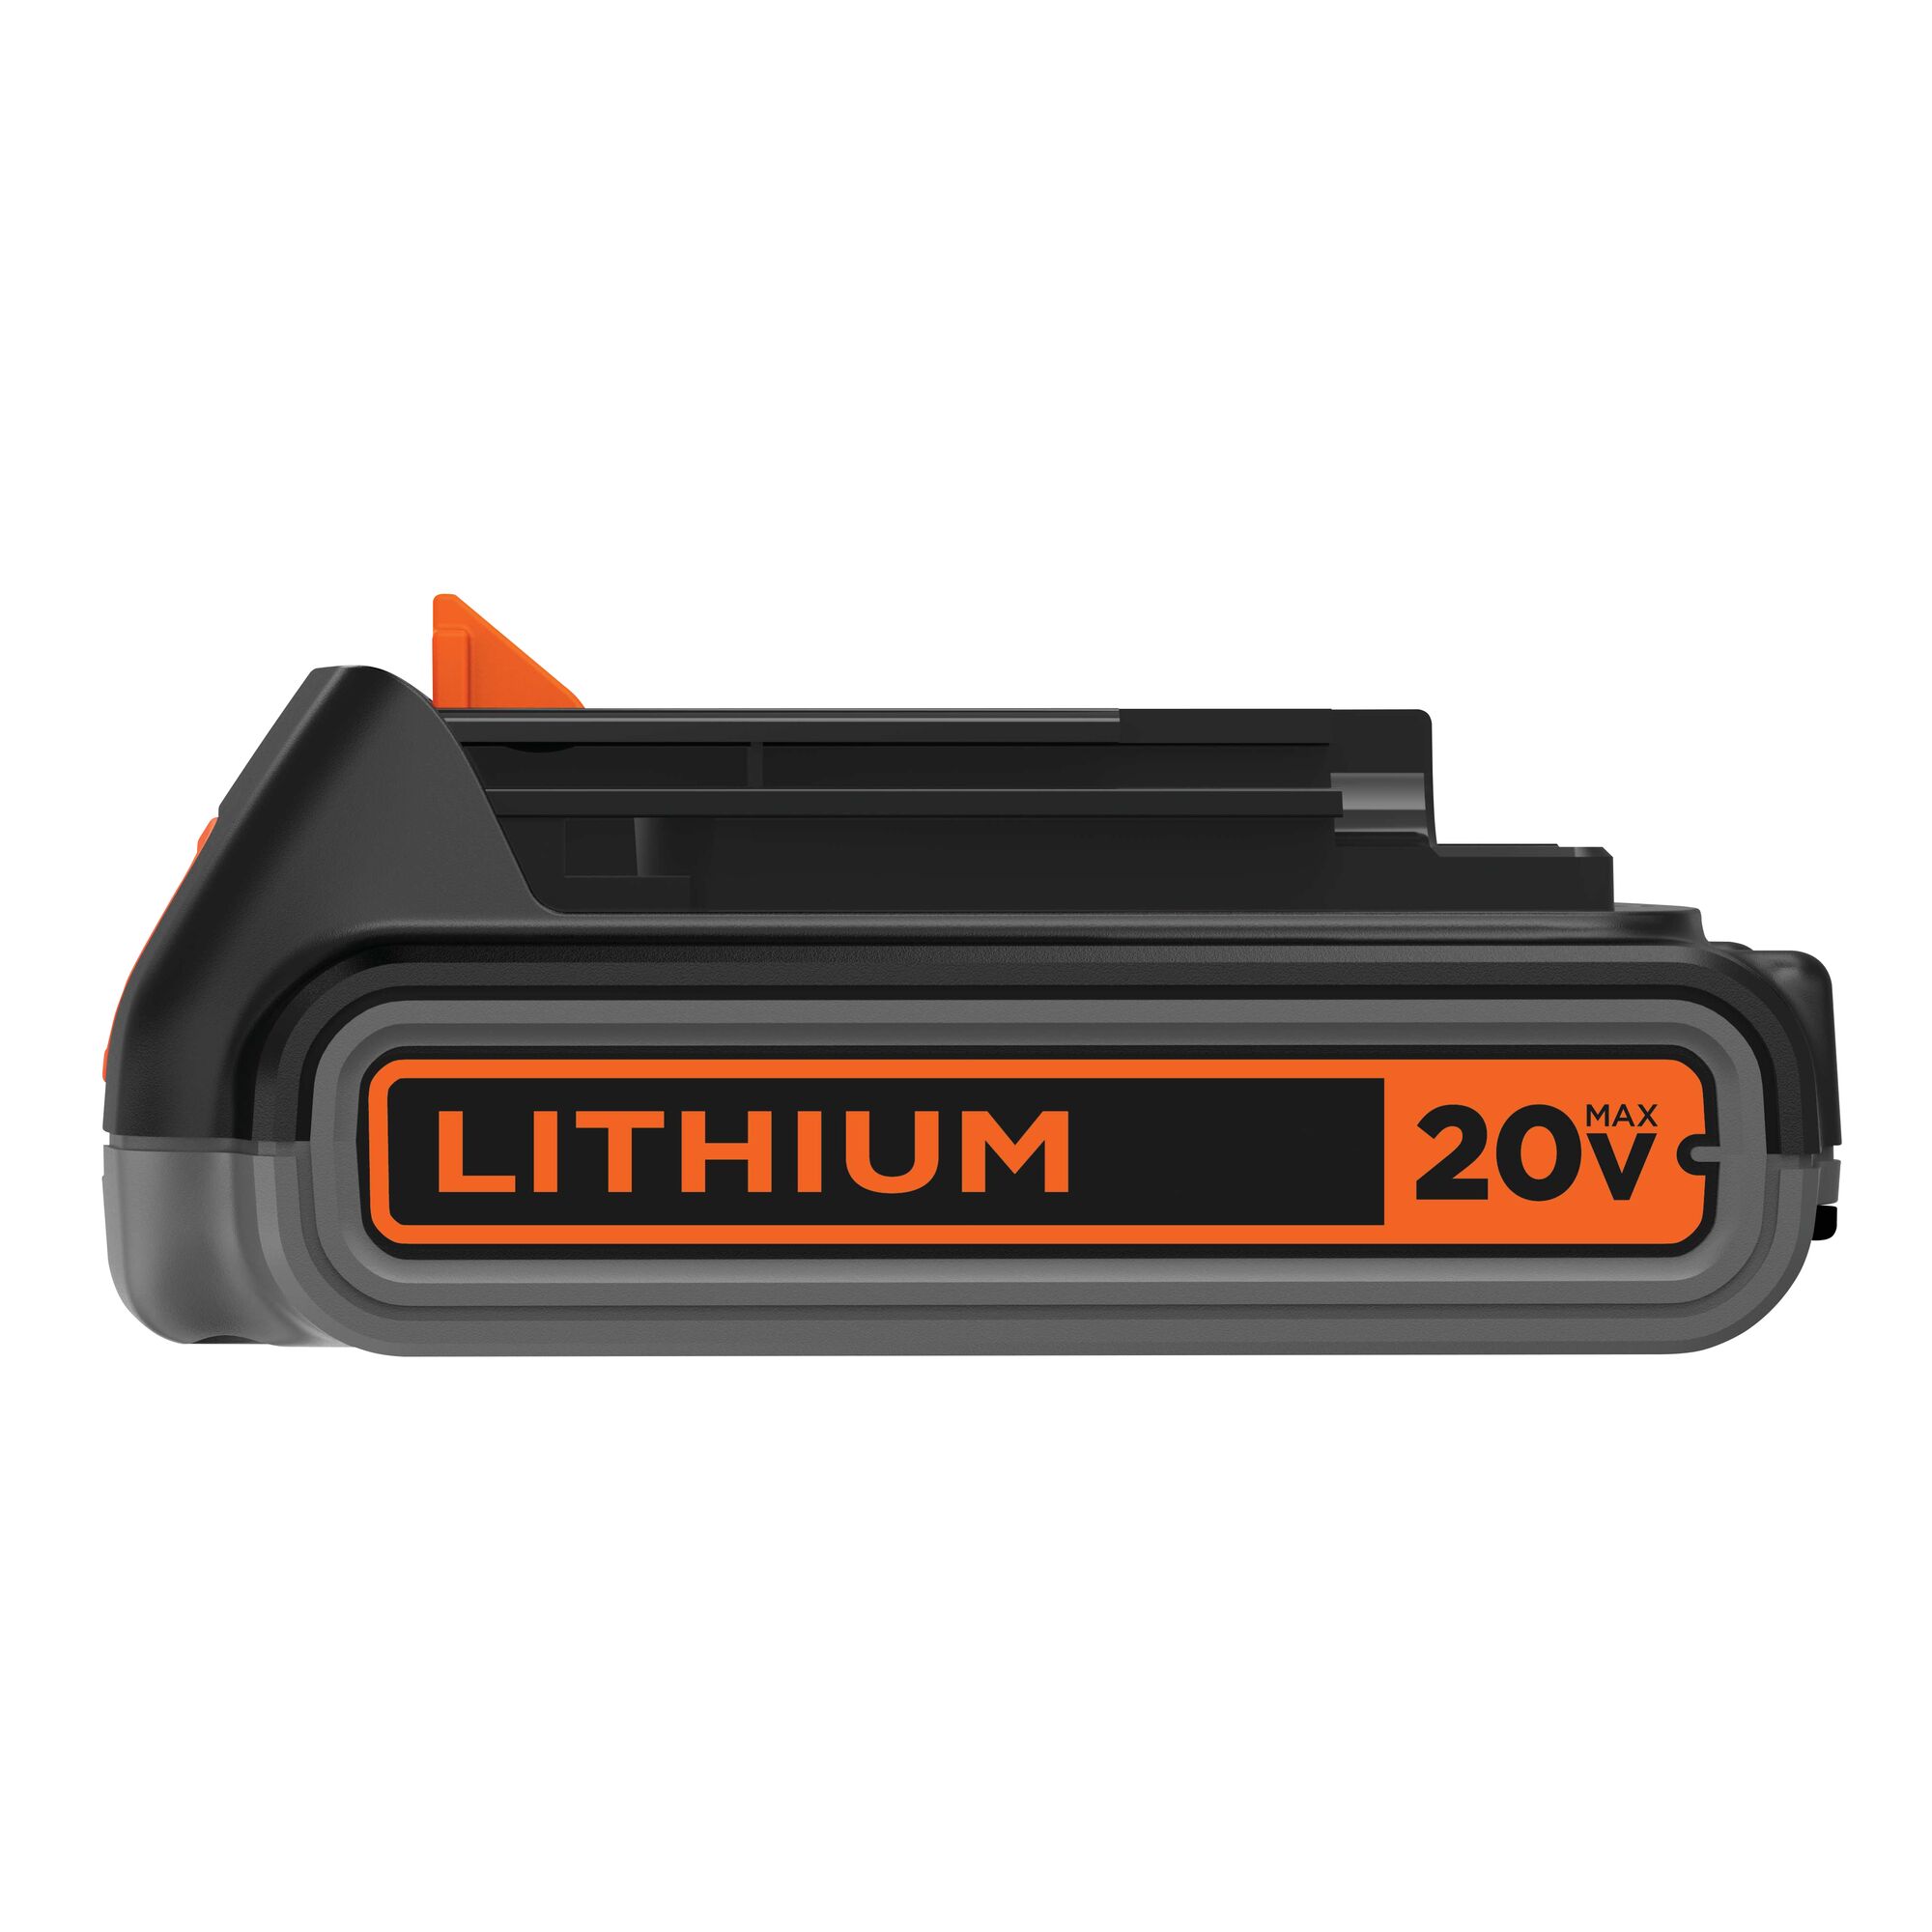 20 volt MAX 2.0 Amp per hour lithium battery pack.